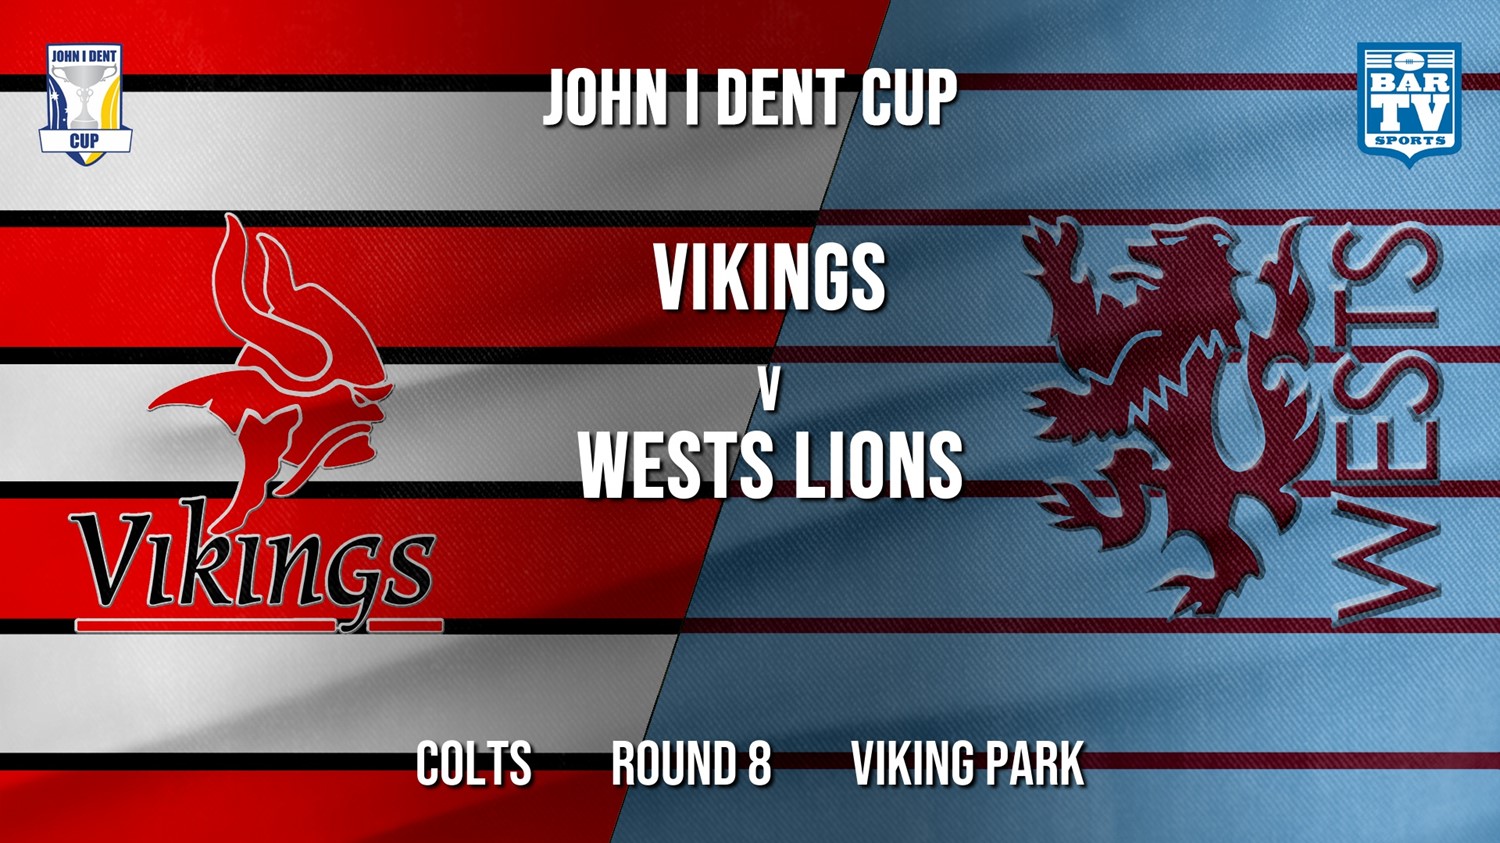 John I Dent Round 8 - Colts - Tuggeranong Vikings v Wests Lions Minigame Slate Image